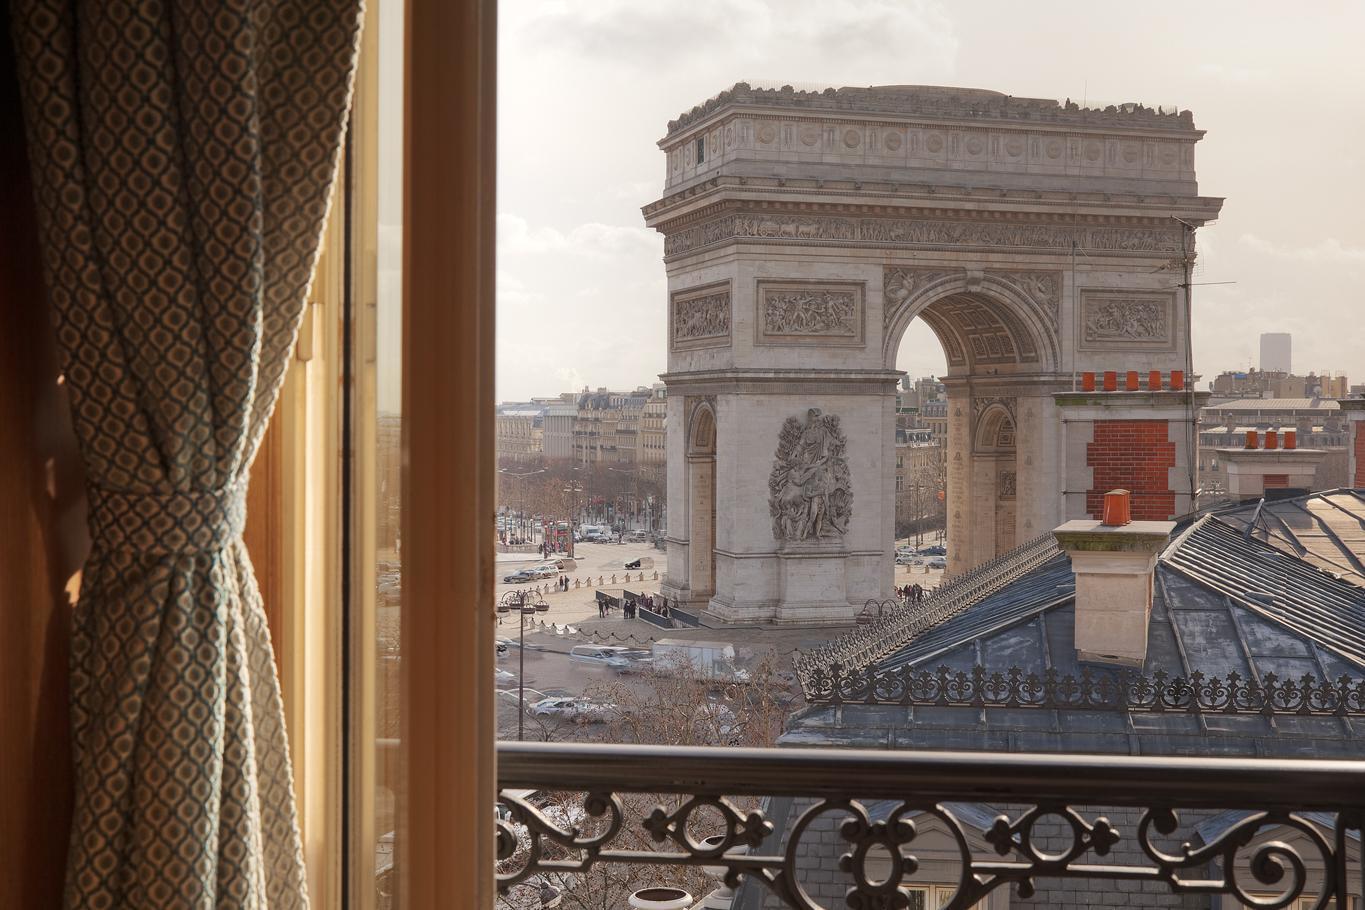 Splendid Etoile Otel Paris Oda fotoğraf